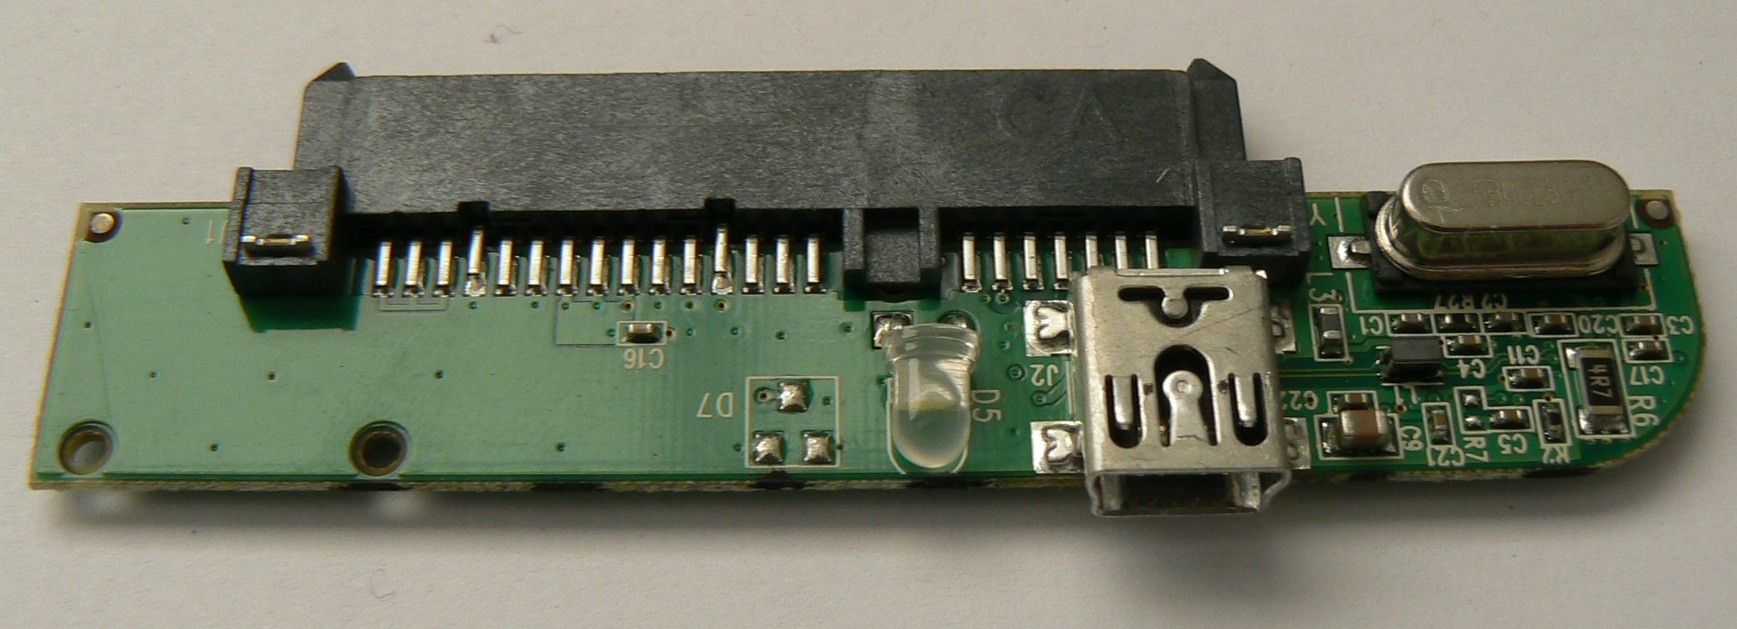 PCBA 4061-705020-000 Rev AA WD Controller Board Elements 320GB/500GB USB 2.0